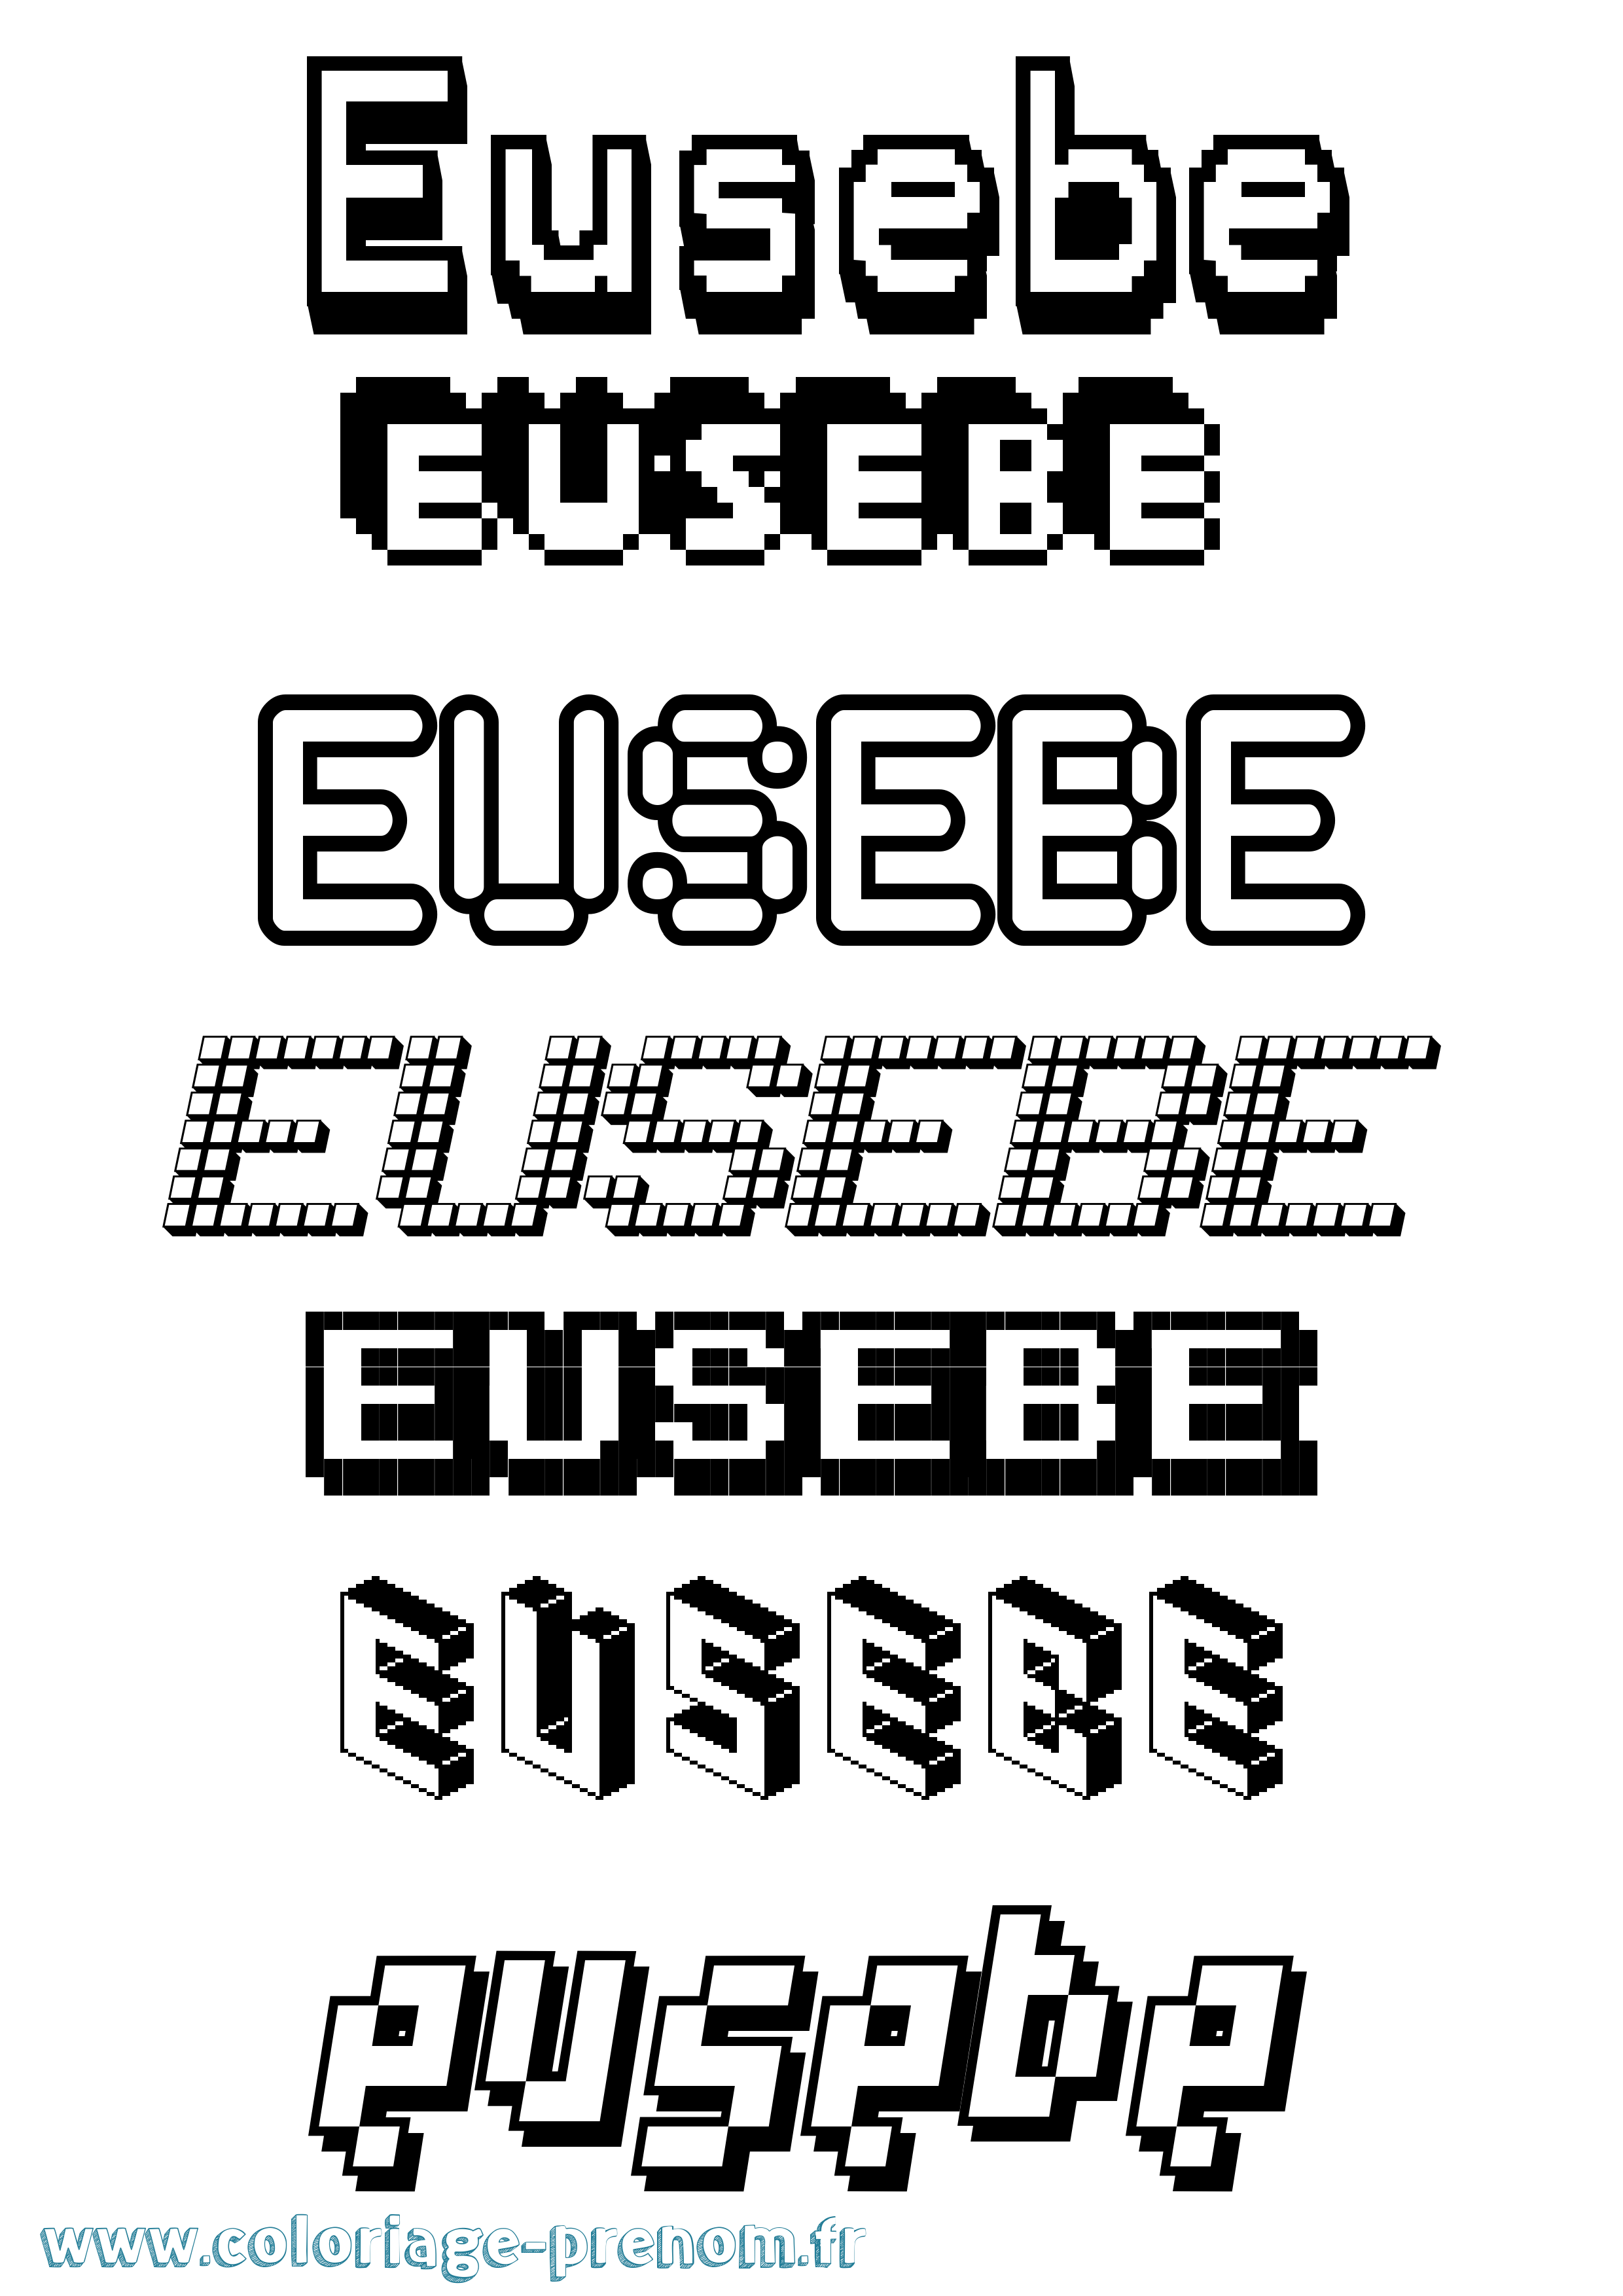 Coloriage prénom Eusebe Pixel